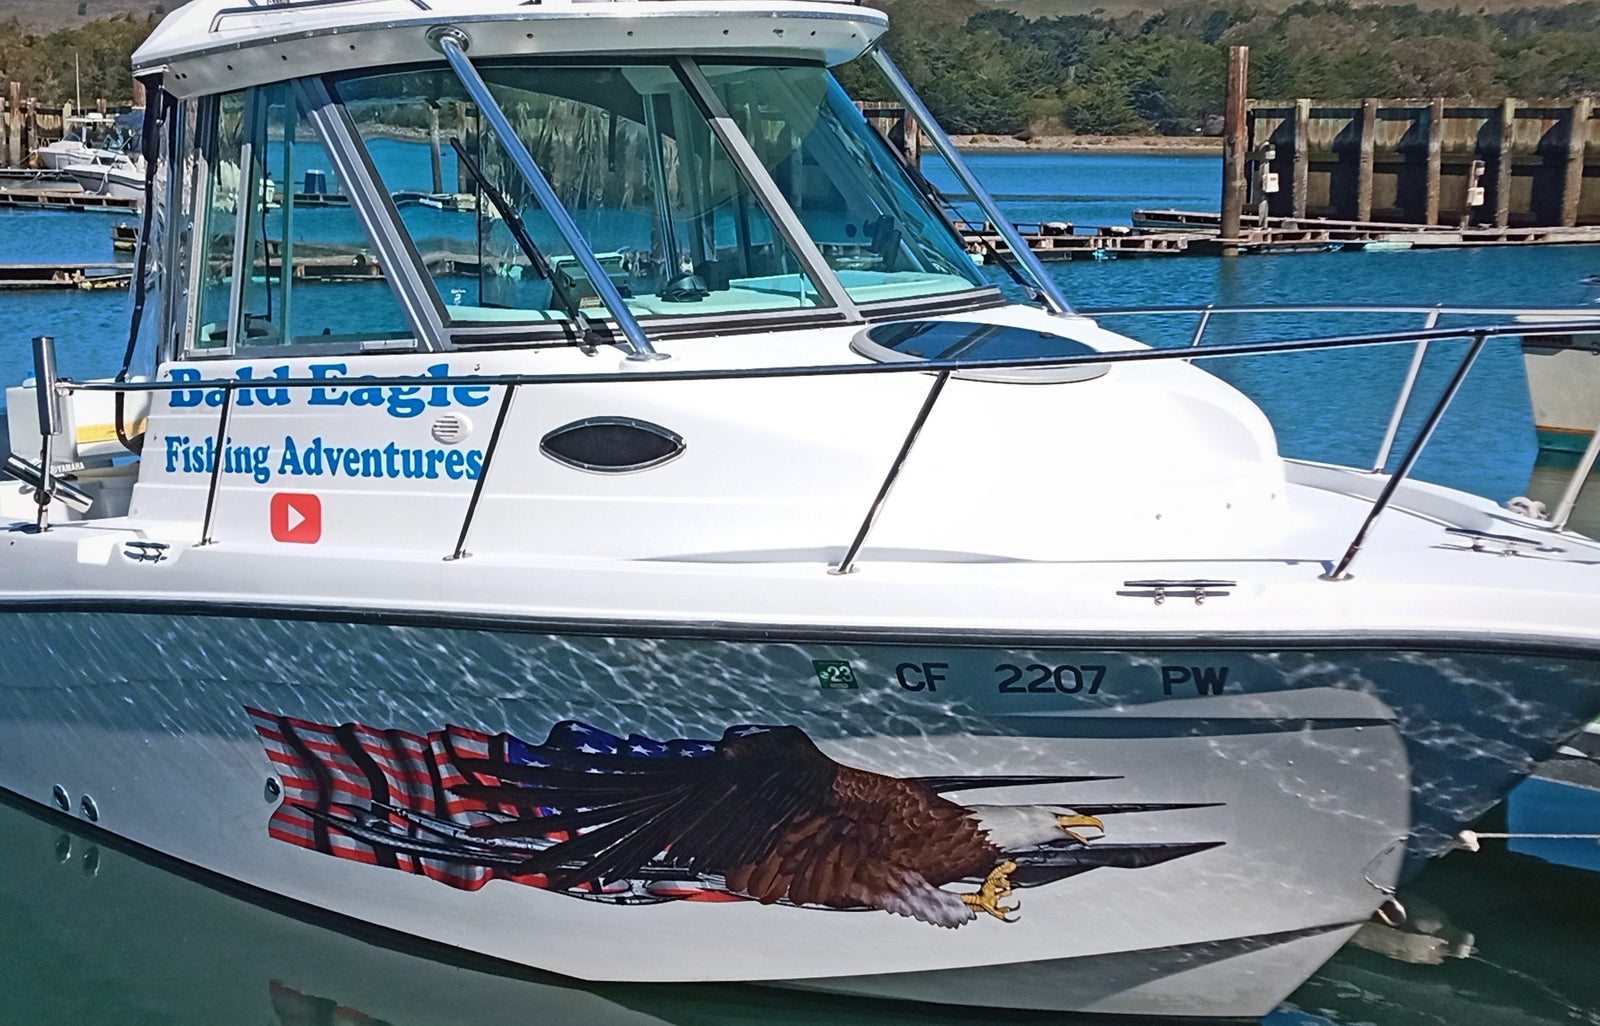 American Bald Eagle Decal on Fishing Boat